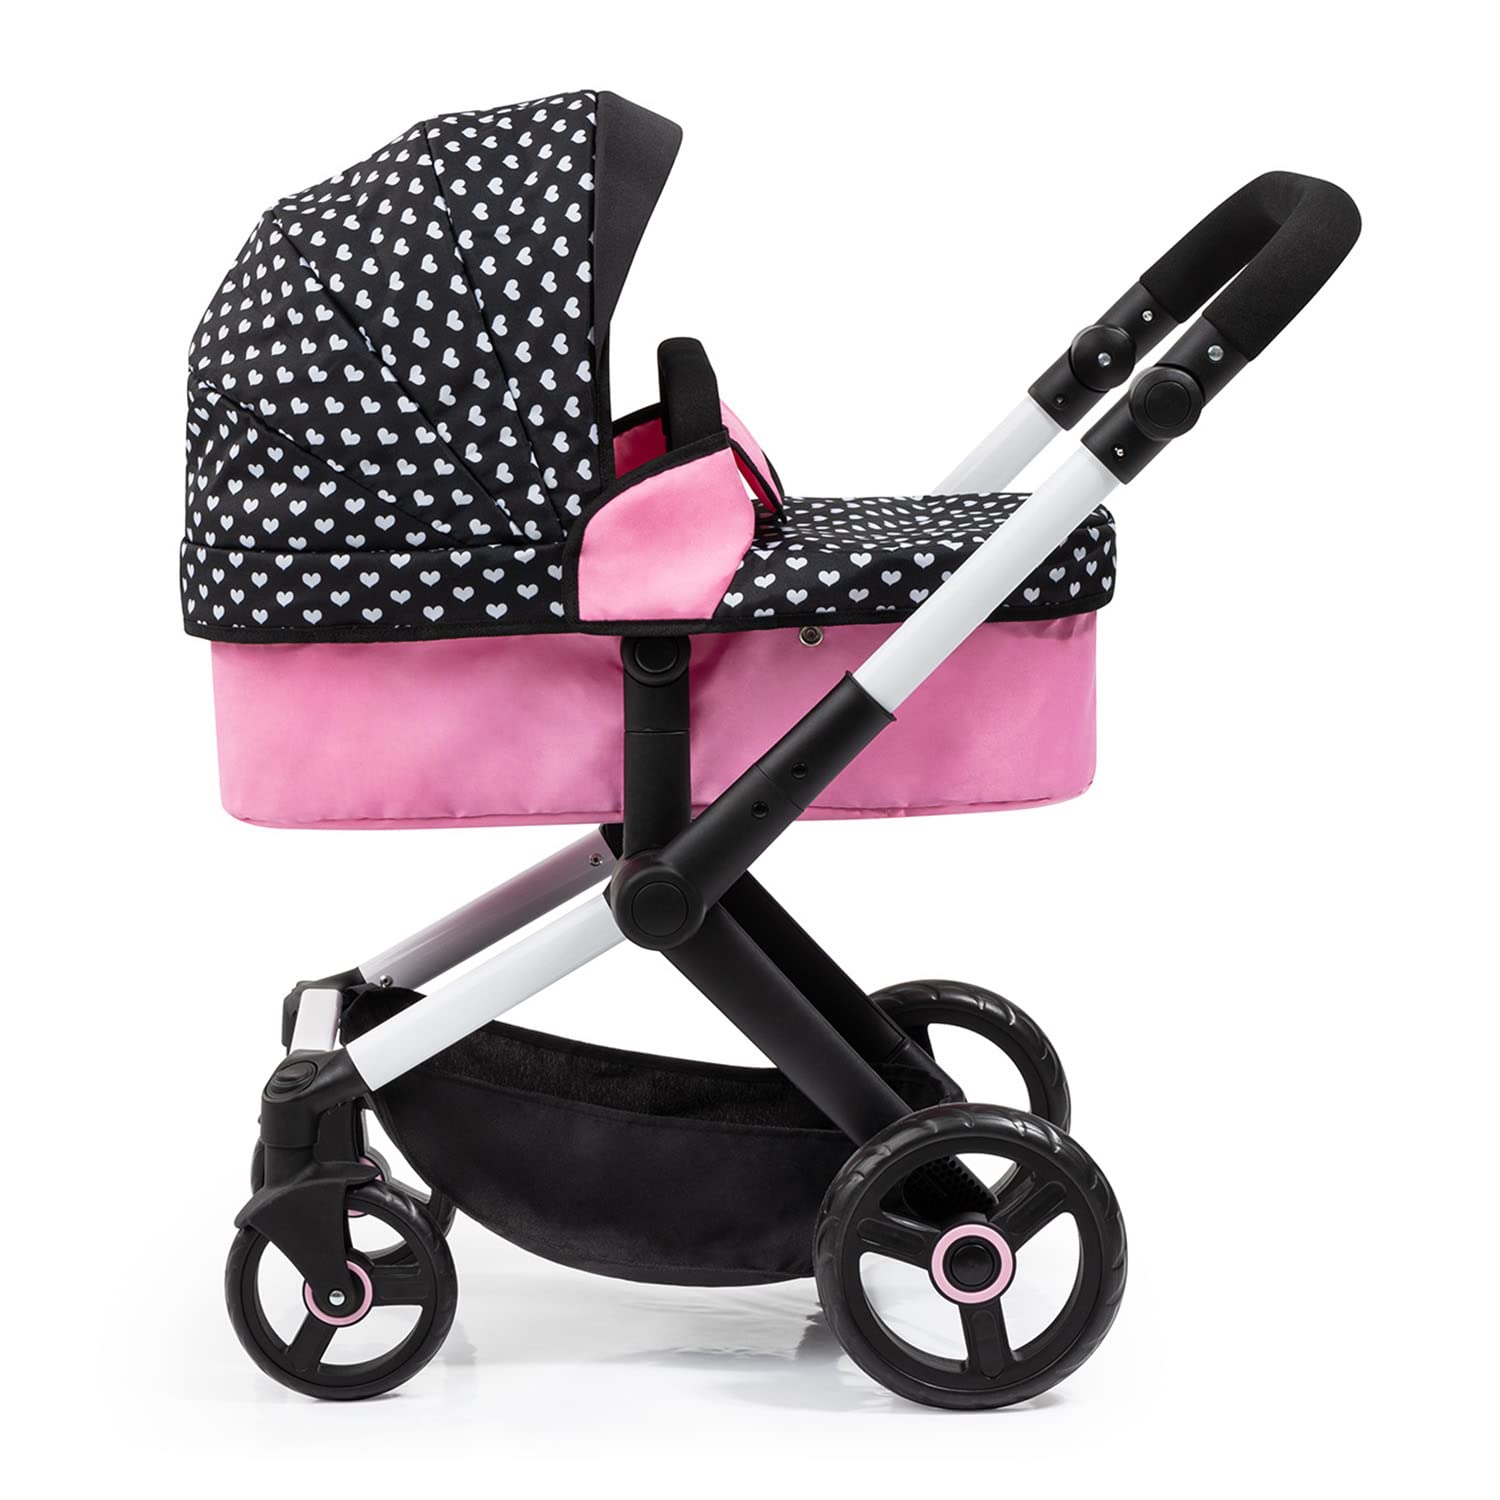 Bayer Design Dolls: Pram Xeo: Hearts Black & Pink - Matching Handbag, Adjustable Handle, for Dolls Up to 20